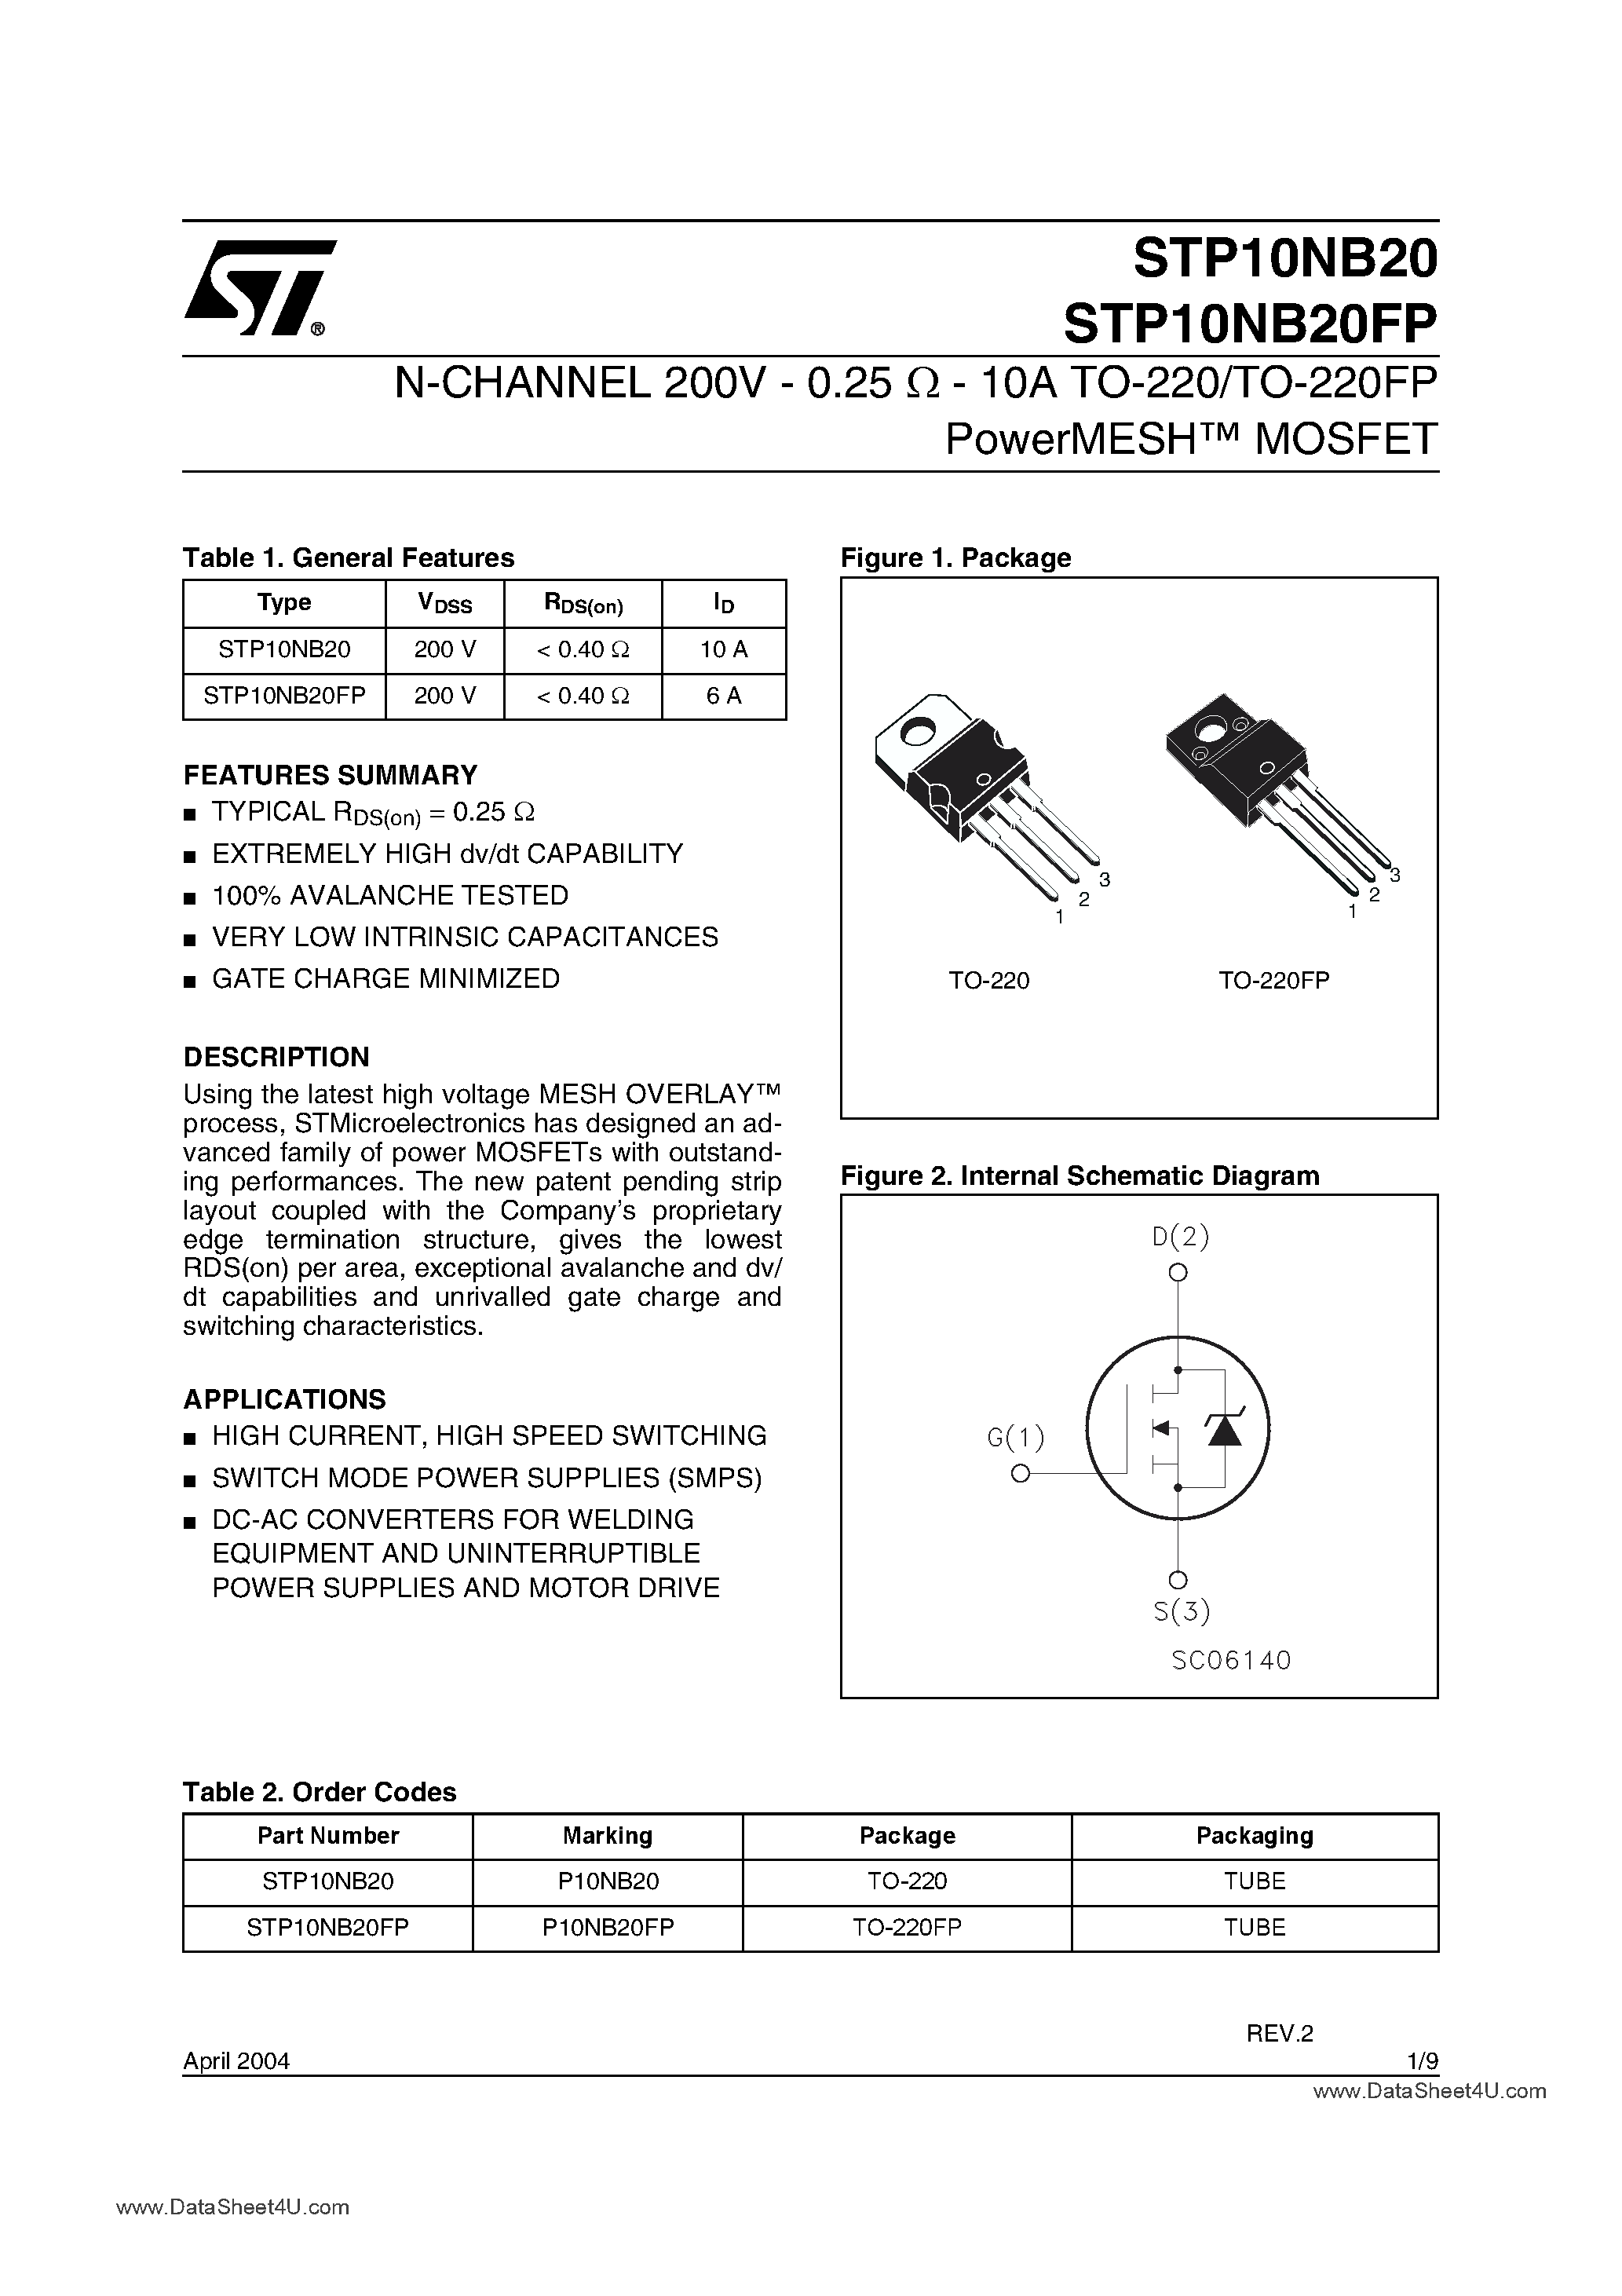 Datasheet STP10NB20 - N - CHANNEL ENHANCEMENT MODE PowerMESH MOSFET page 1